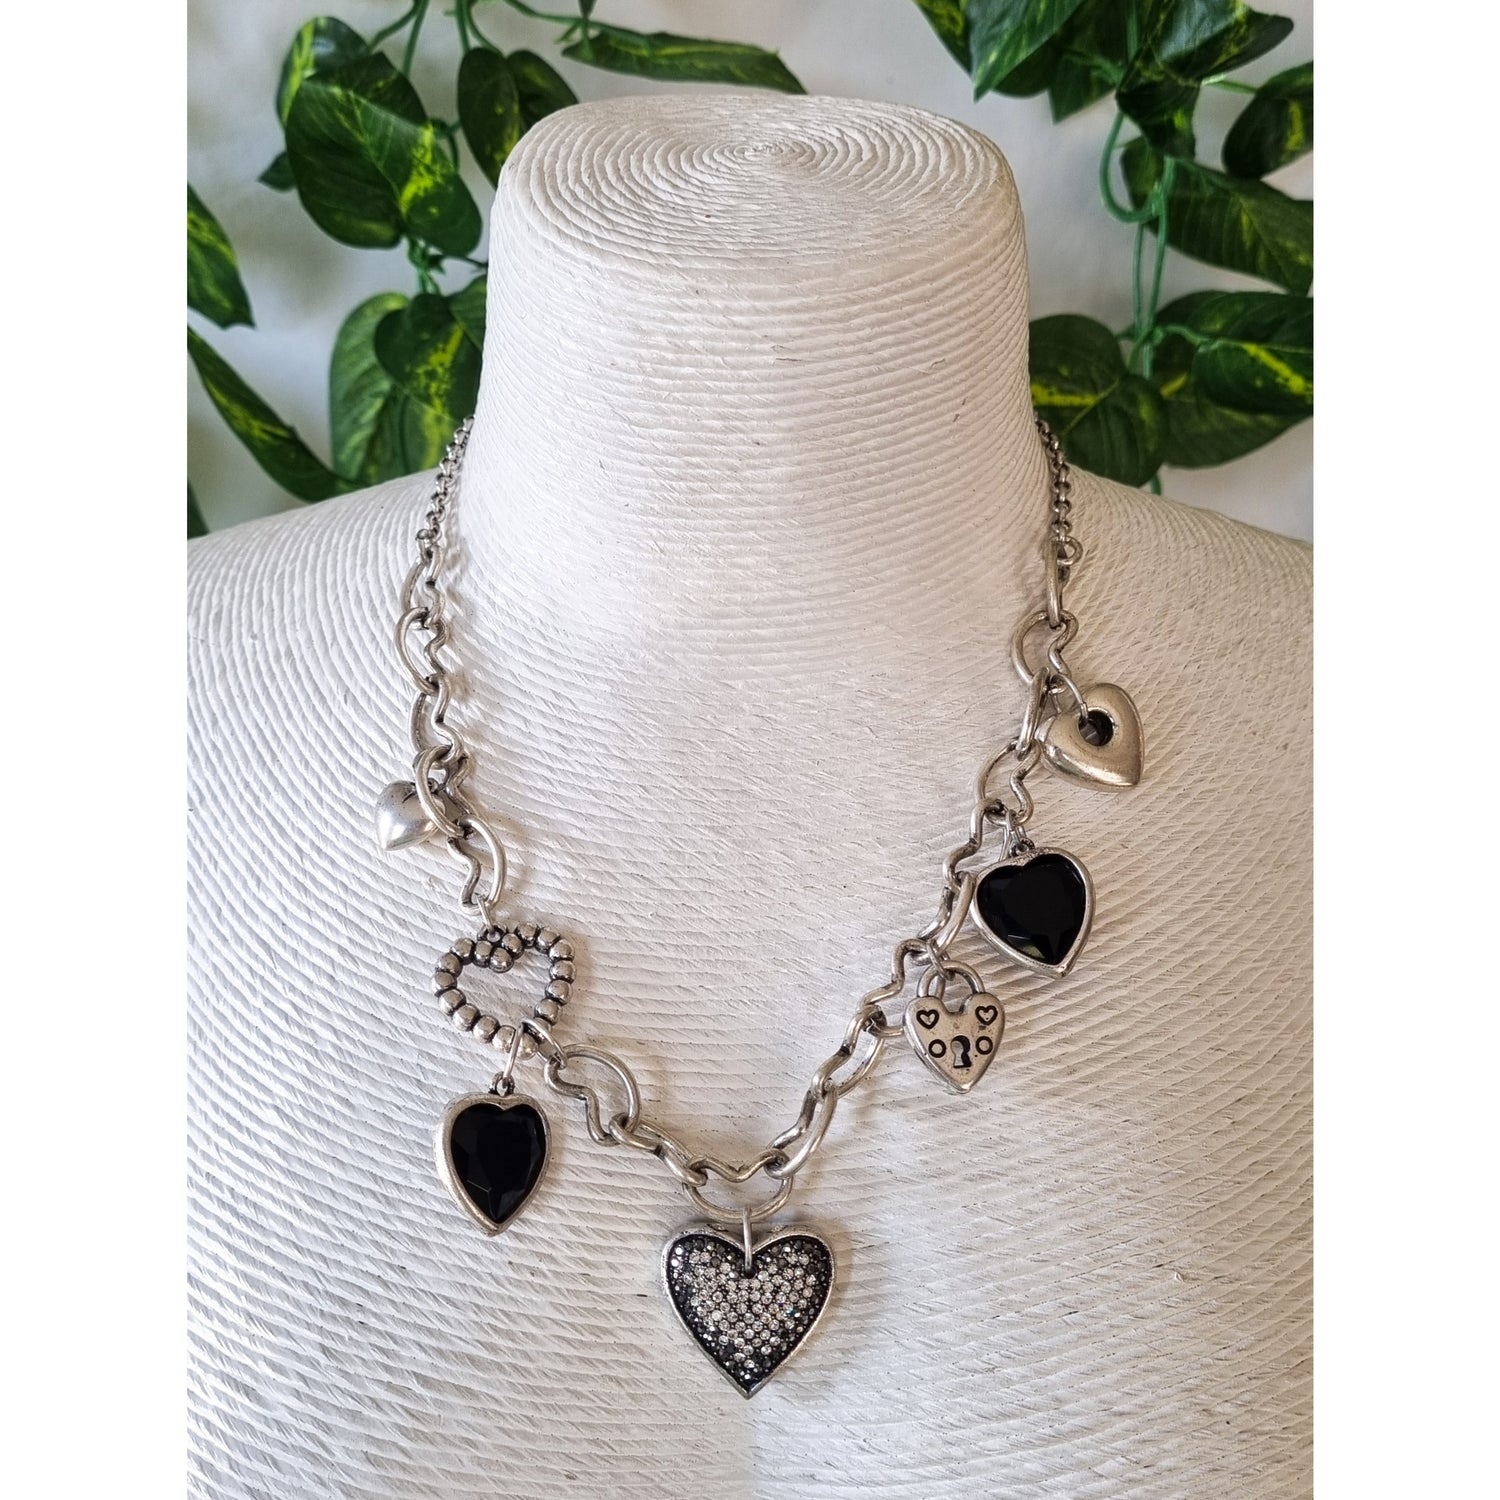 Milano Swarovski Necklace- Silver Heart